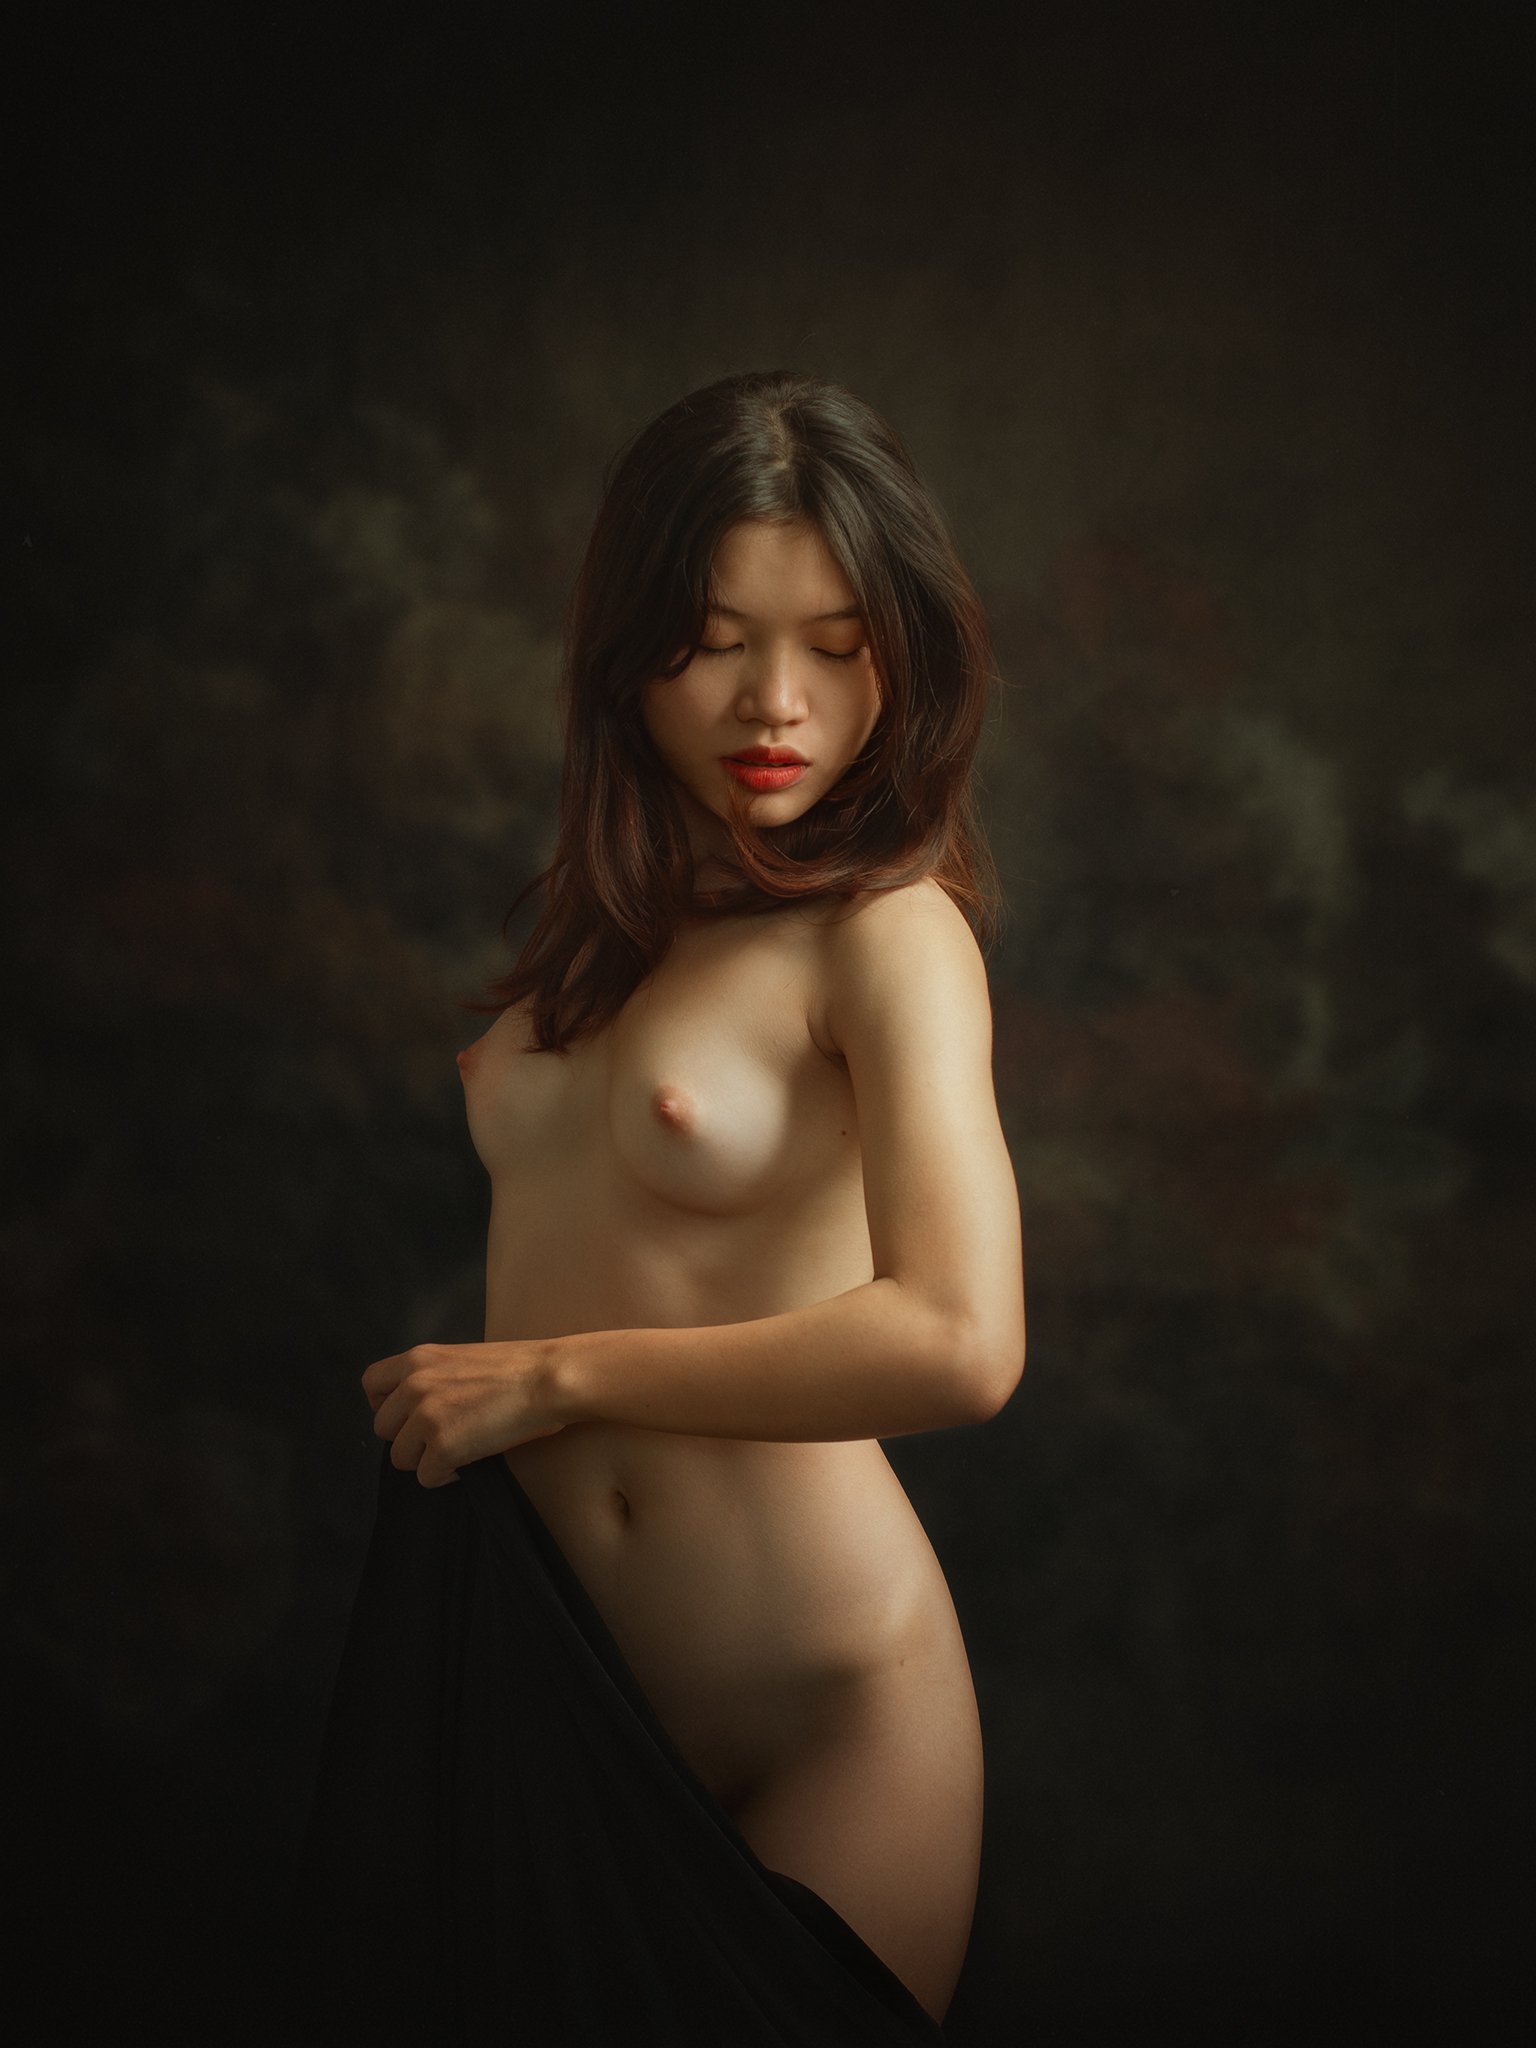 nude, fine nude, woman, female, beauty, body, vietnamese, asian, girl, Hoang Viet Nguyen